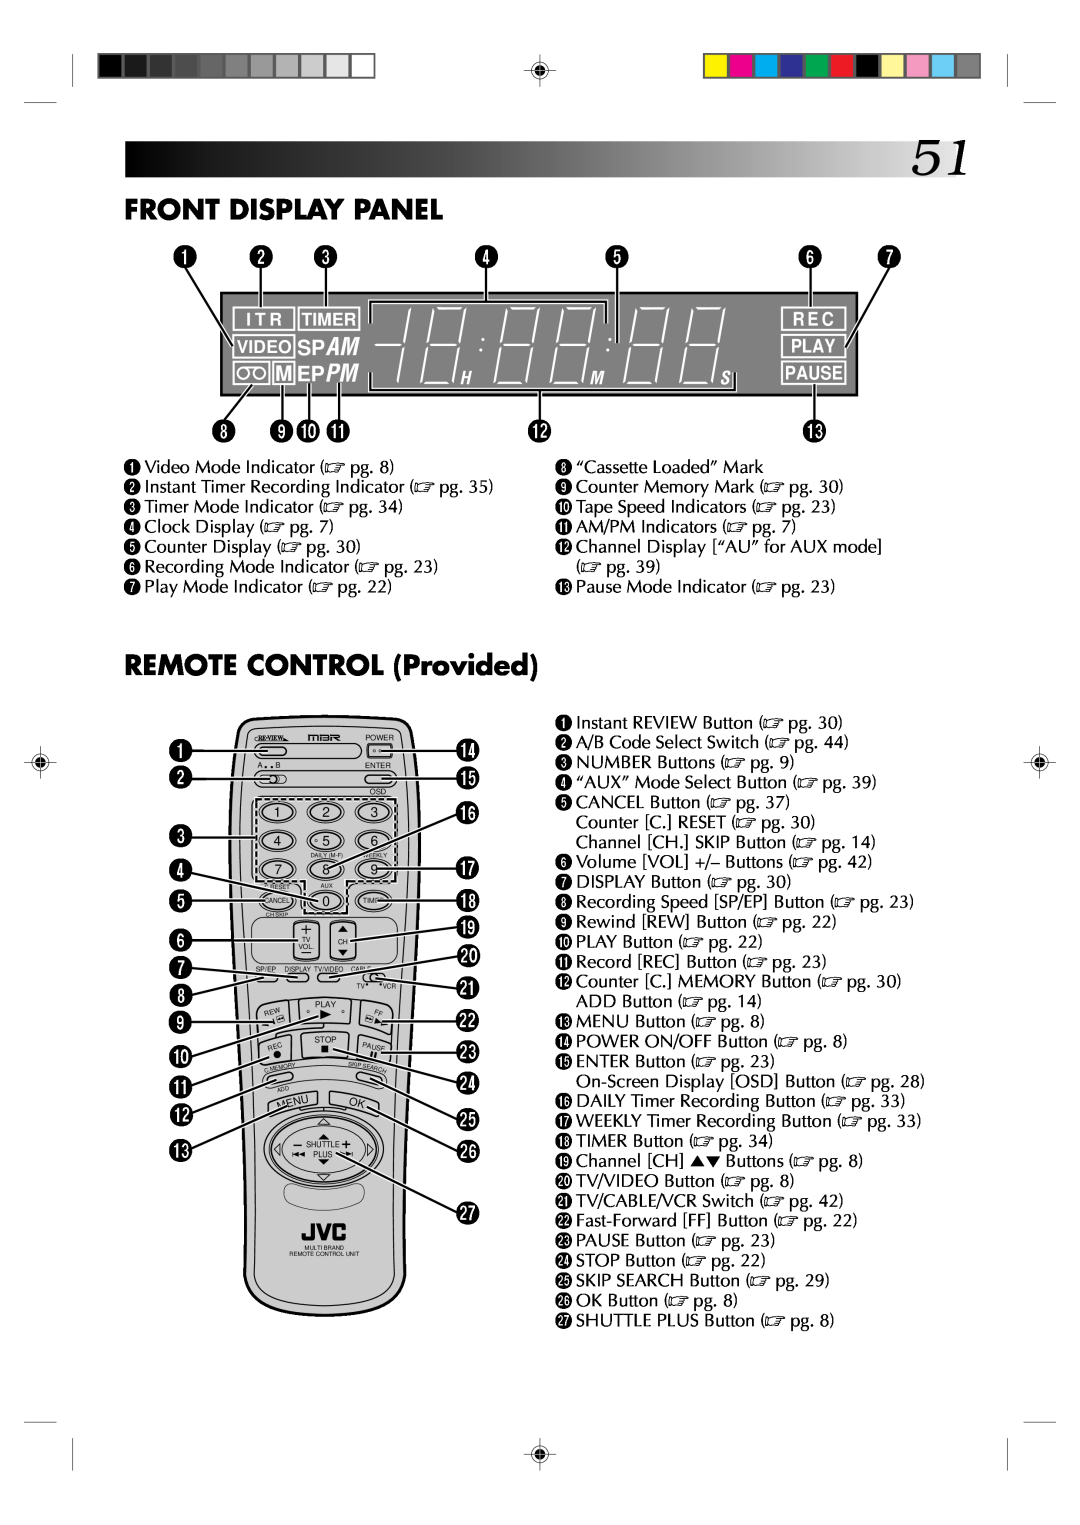 JVC HR-VP434U manual Front Display Panel, REMOTE CONTROL Provided 